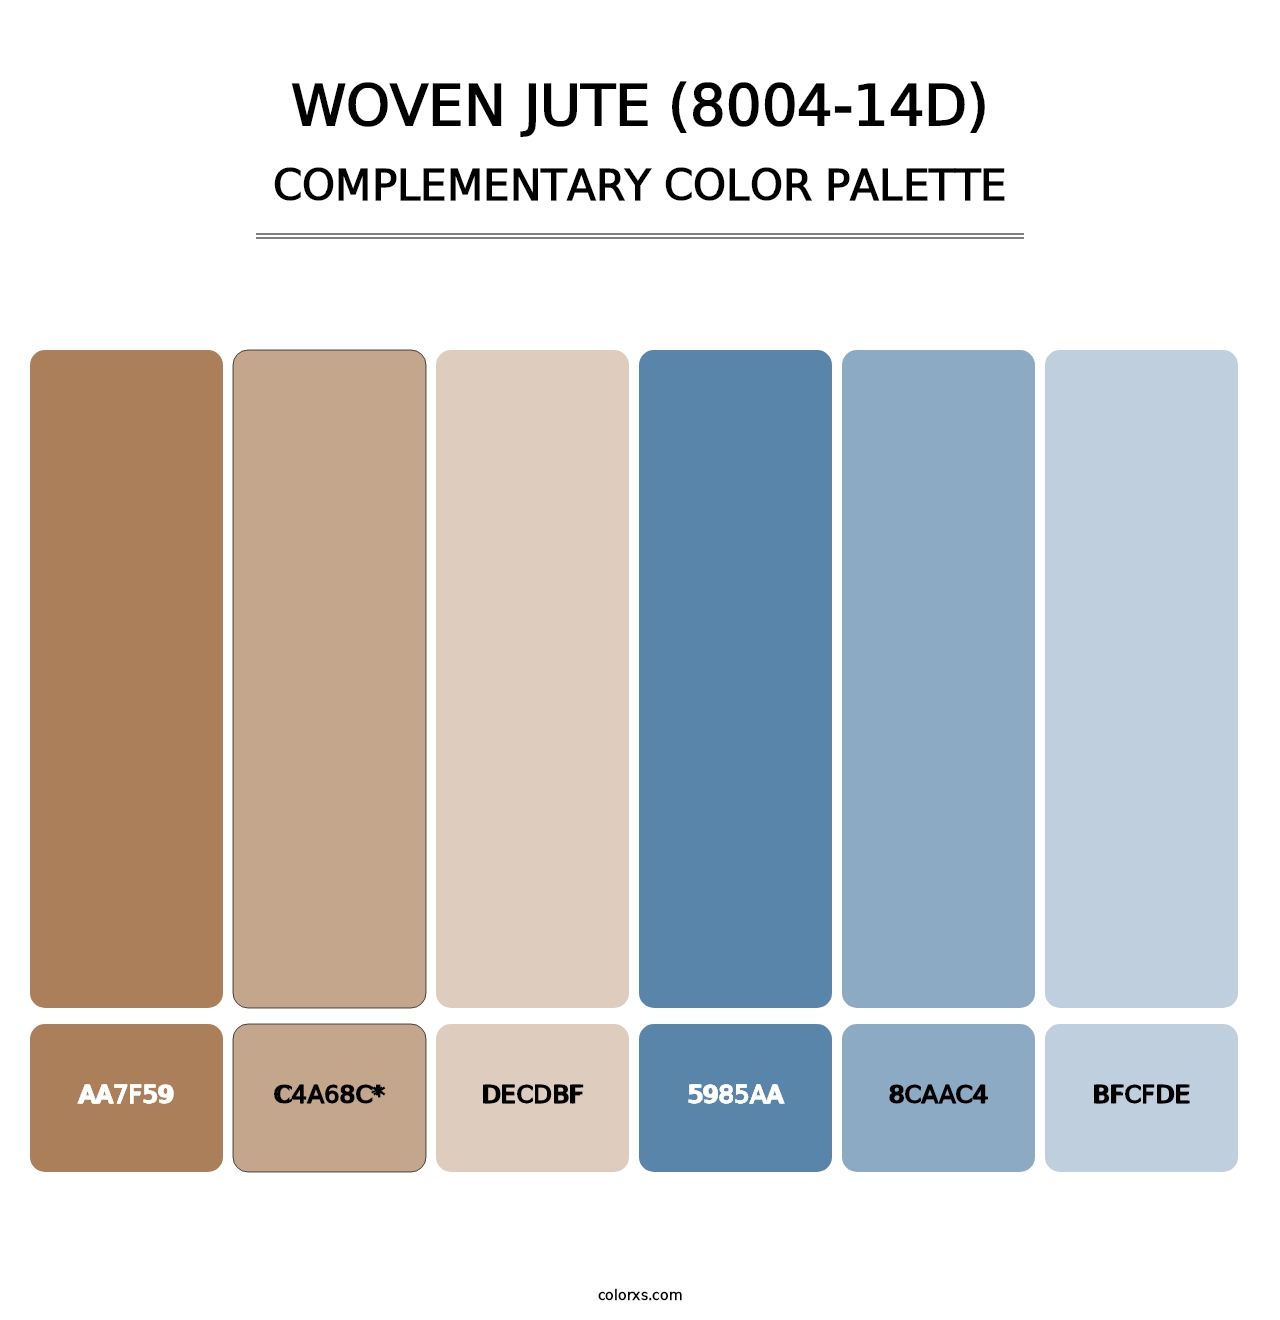 Woven Jute (8004-14D) - Complementary Color Palette